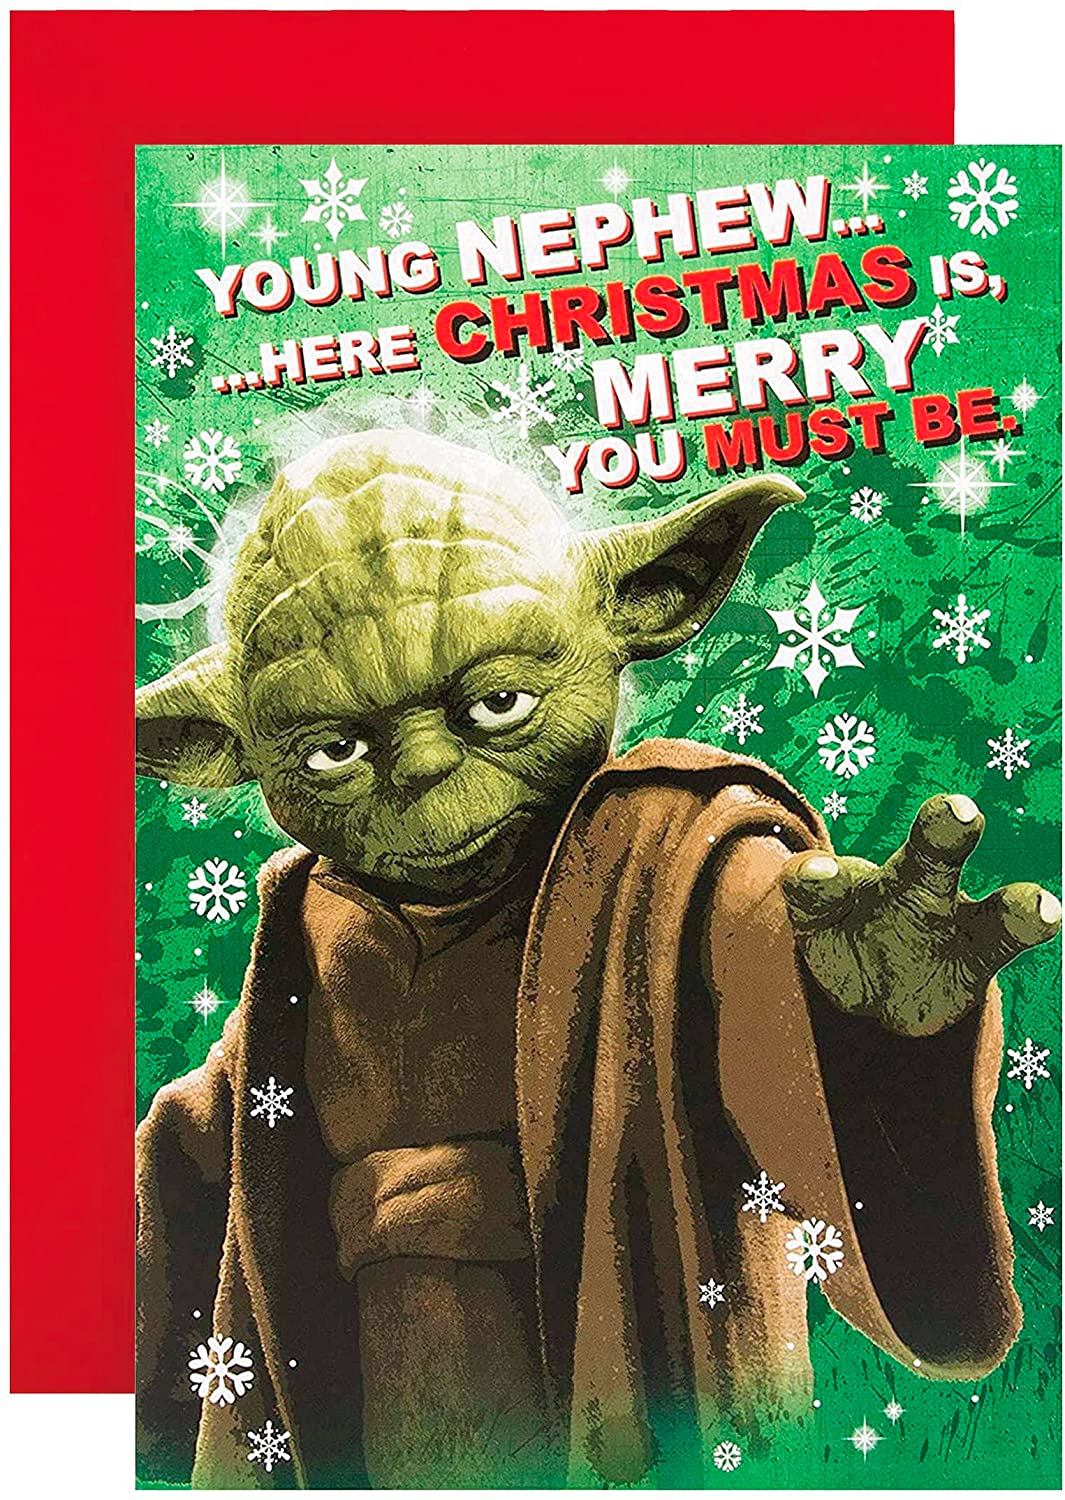 Hallmark Nephew Star Wars Christmas Card RRP £2.50 CLEARANCE XL £1.49